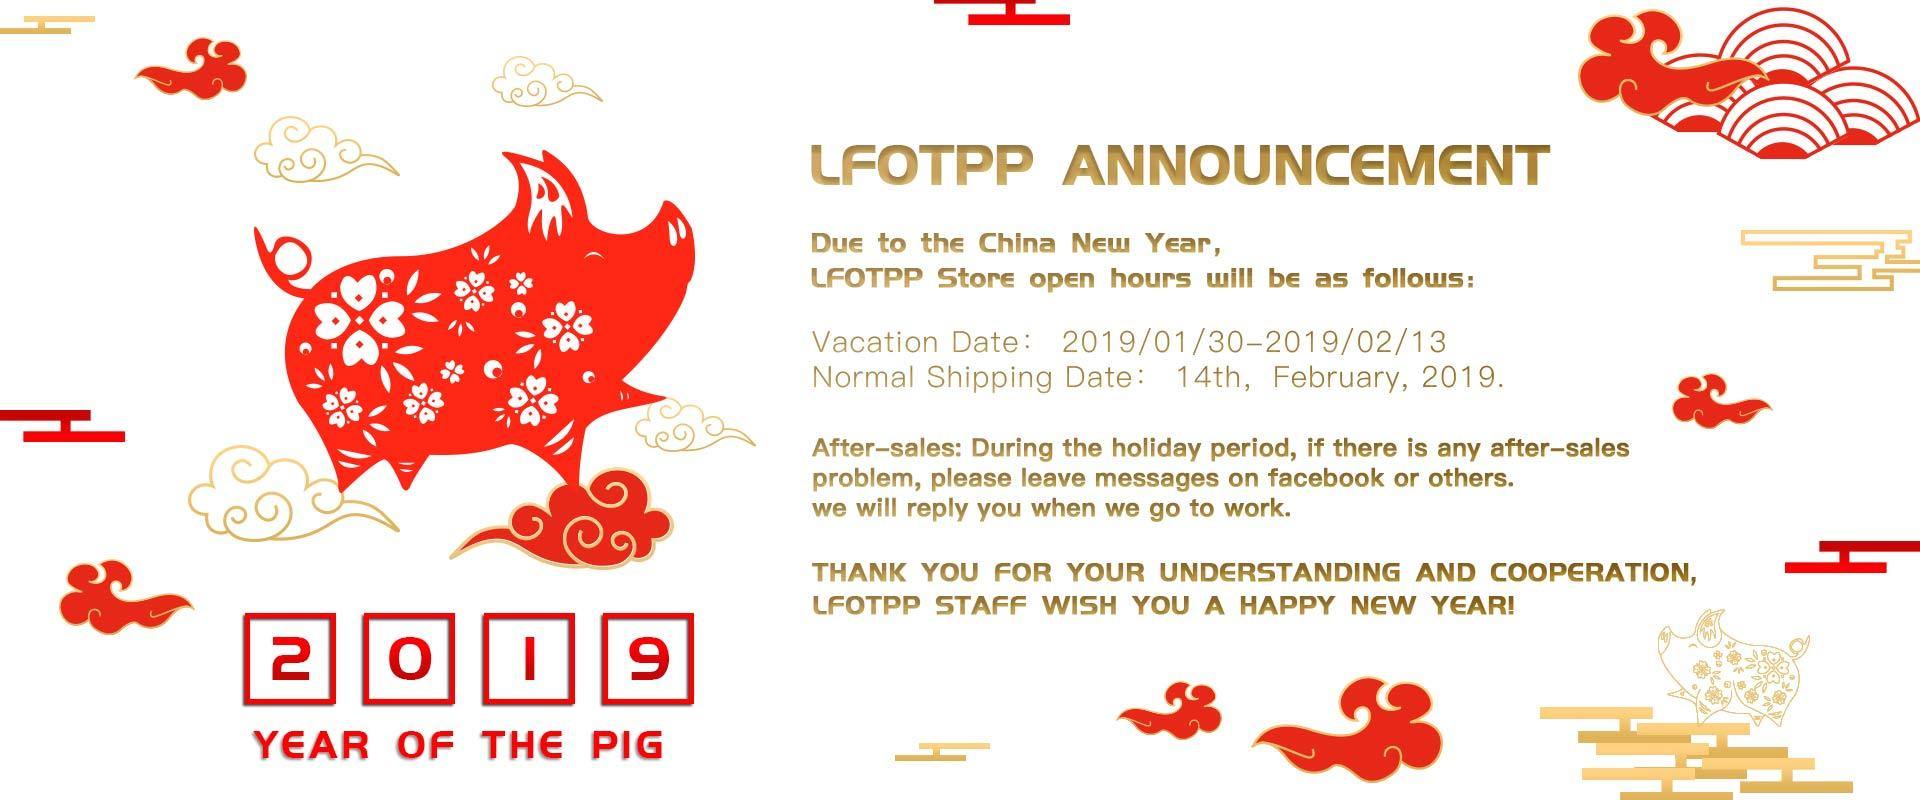 LFOTPP Announcement | LFOTPP